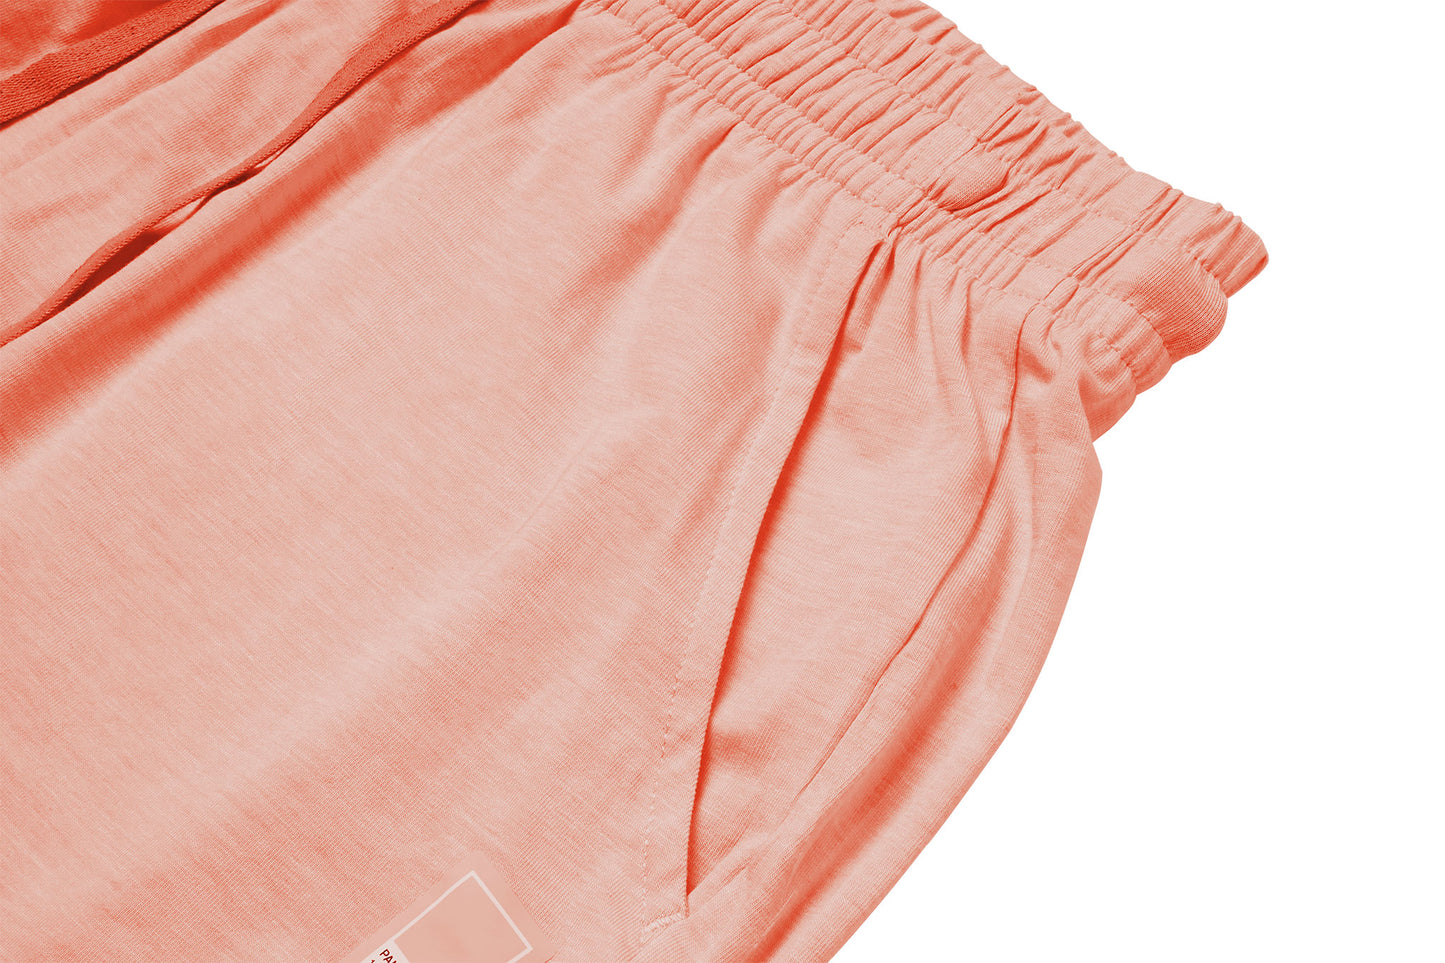 Women's Shorts (Bamboo Jersey) - Pantone Coral Almond